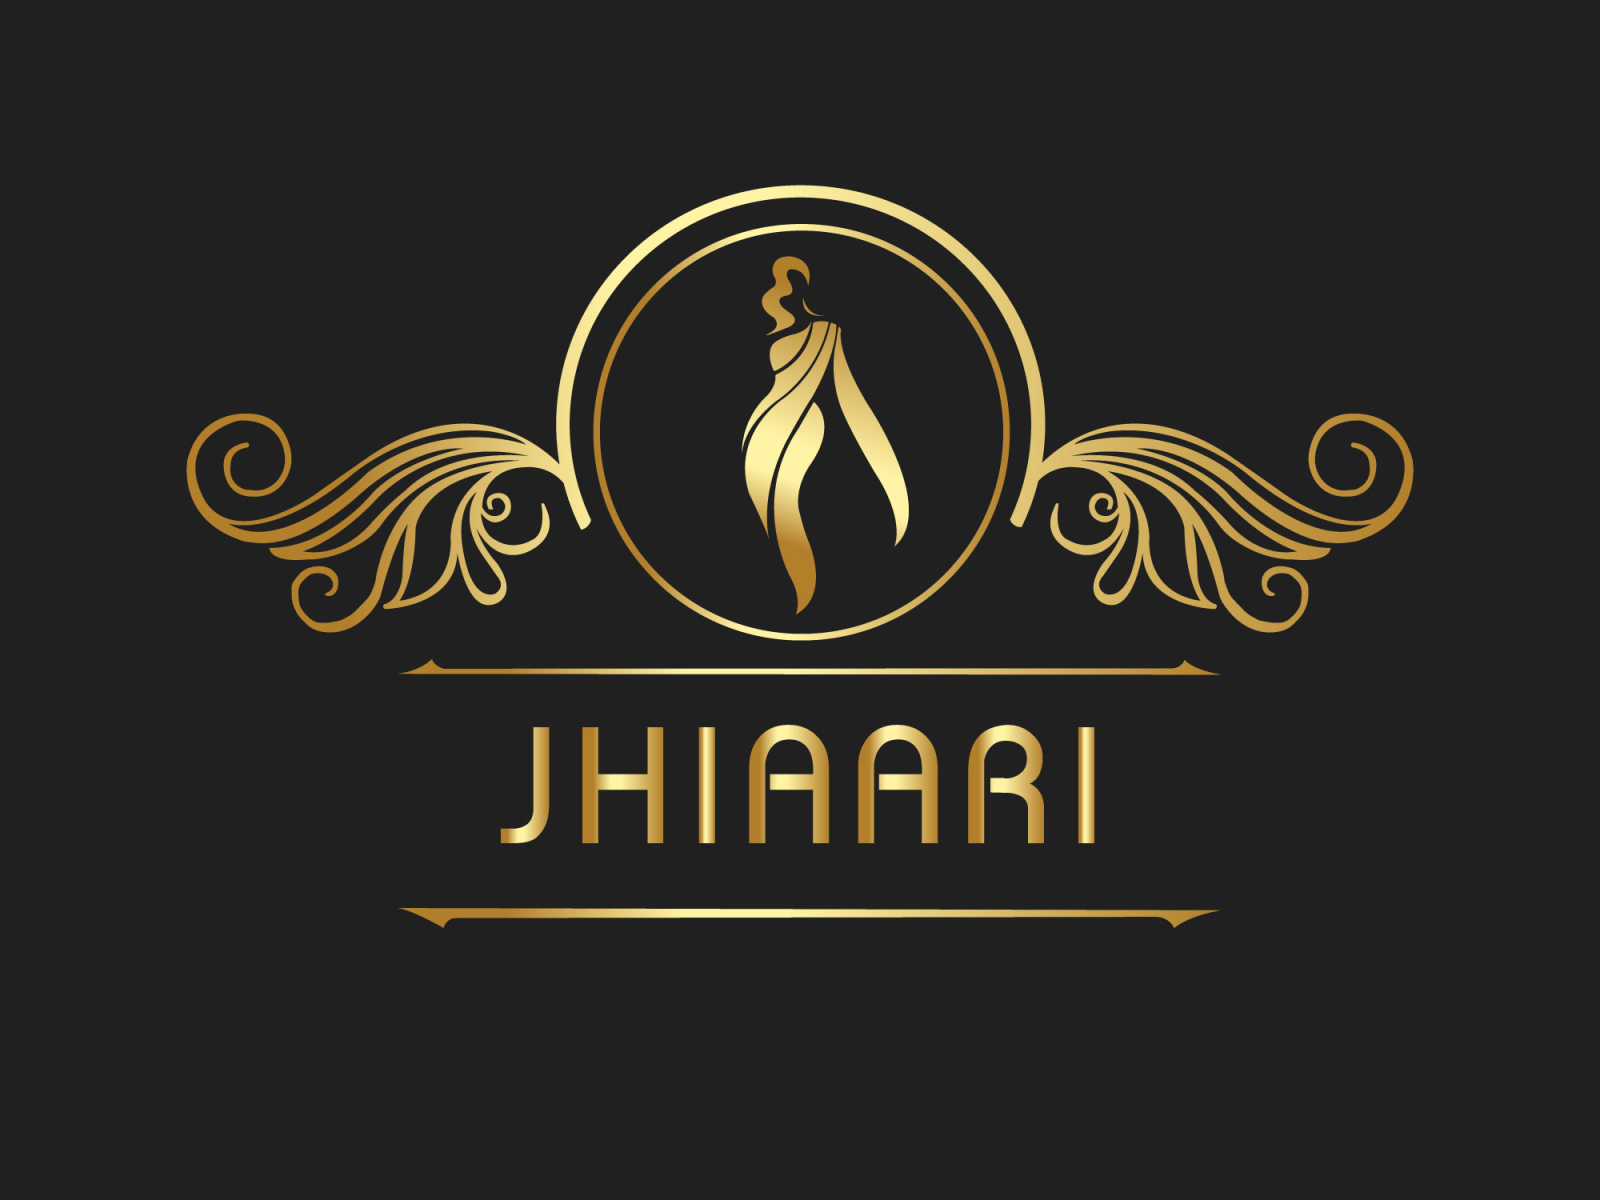 Jhiaari logo by Hridoy Sadik on Dribbble